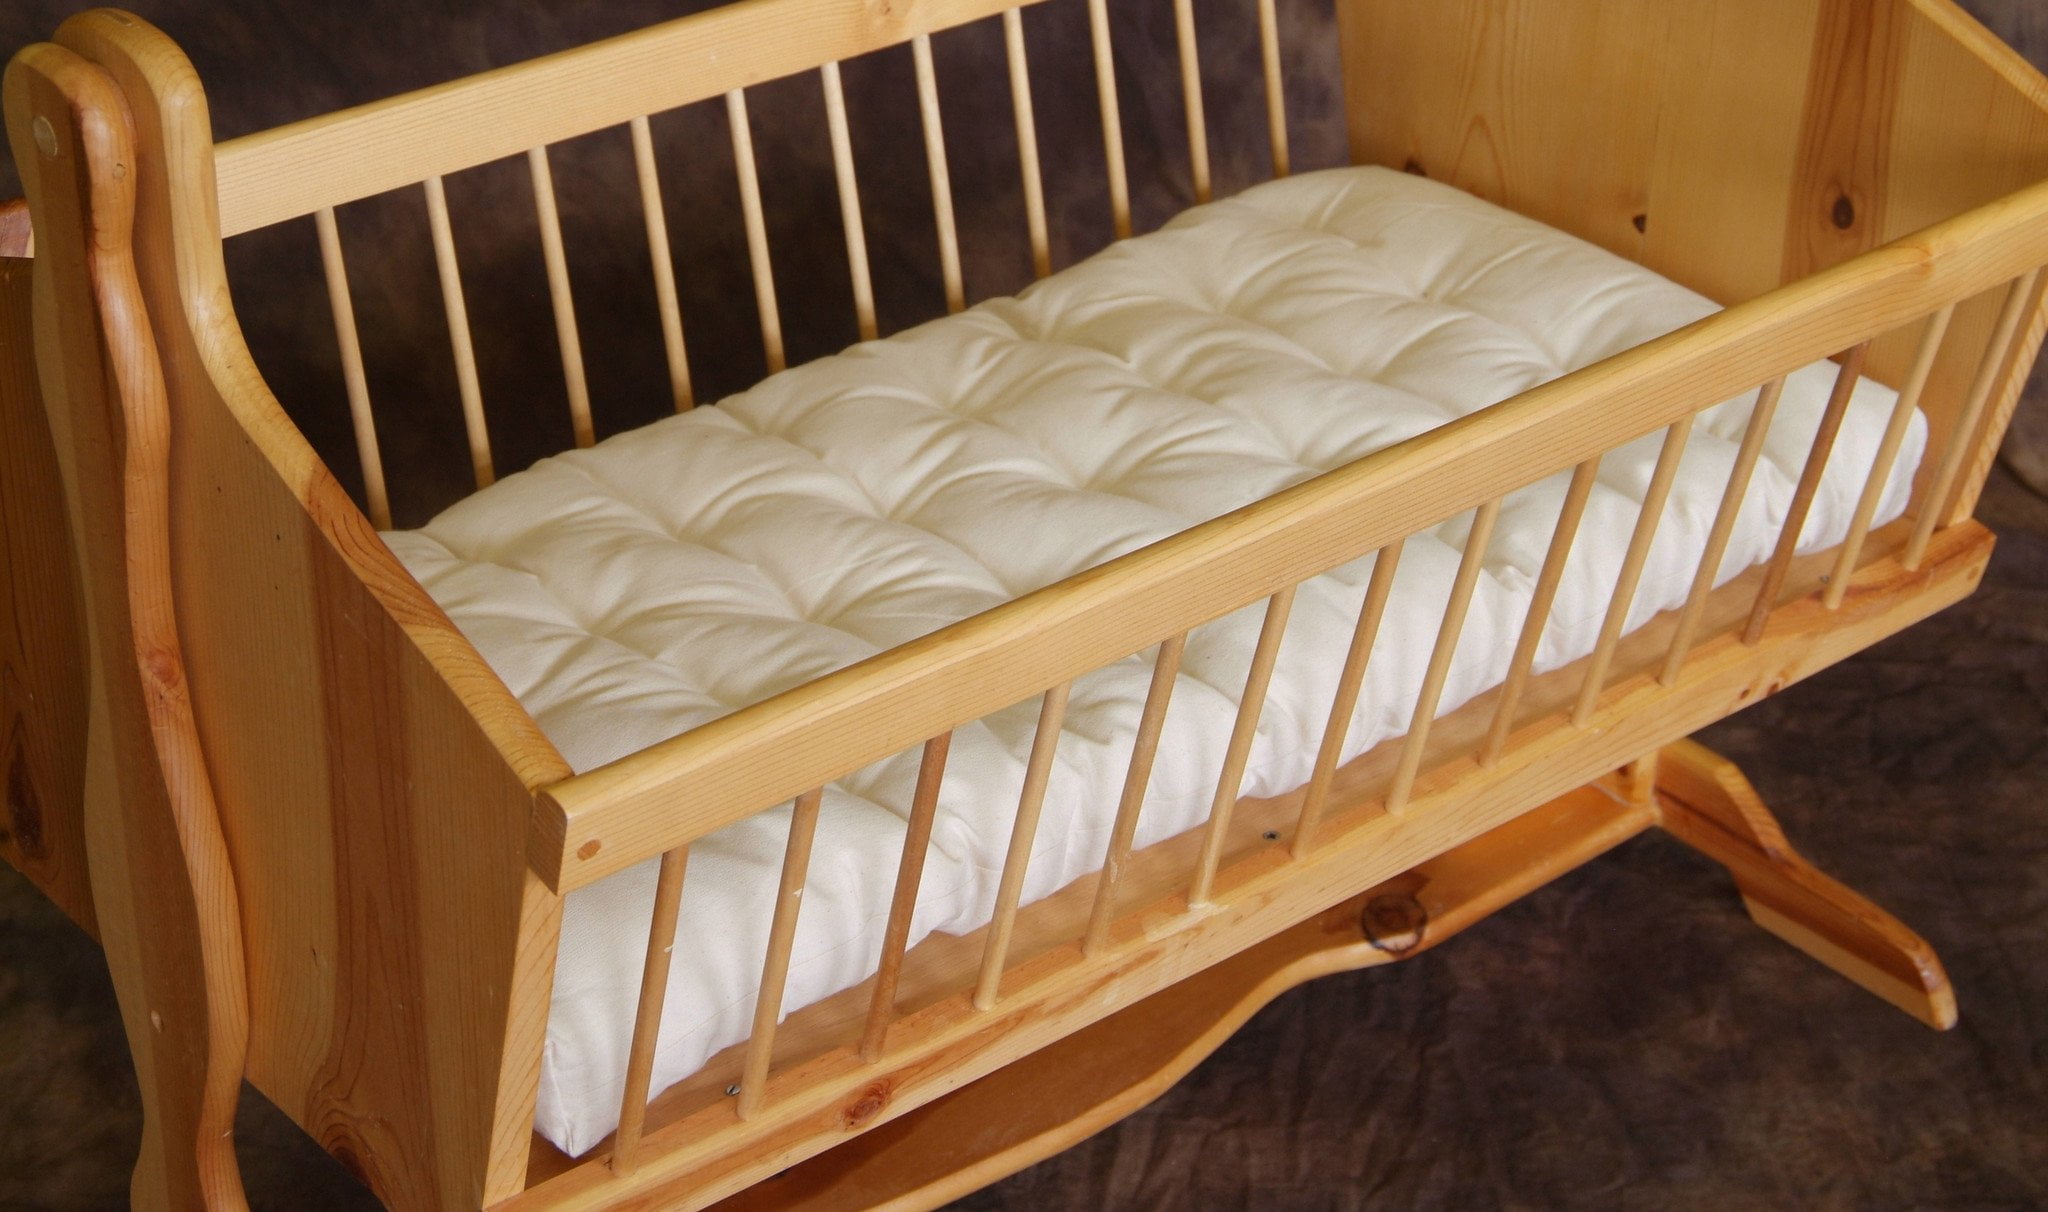 cradle mattress walmart